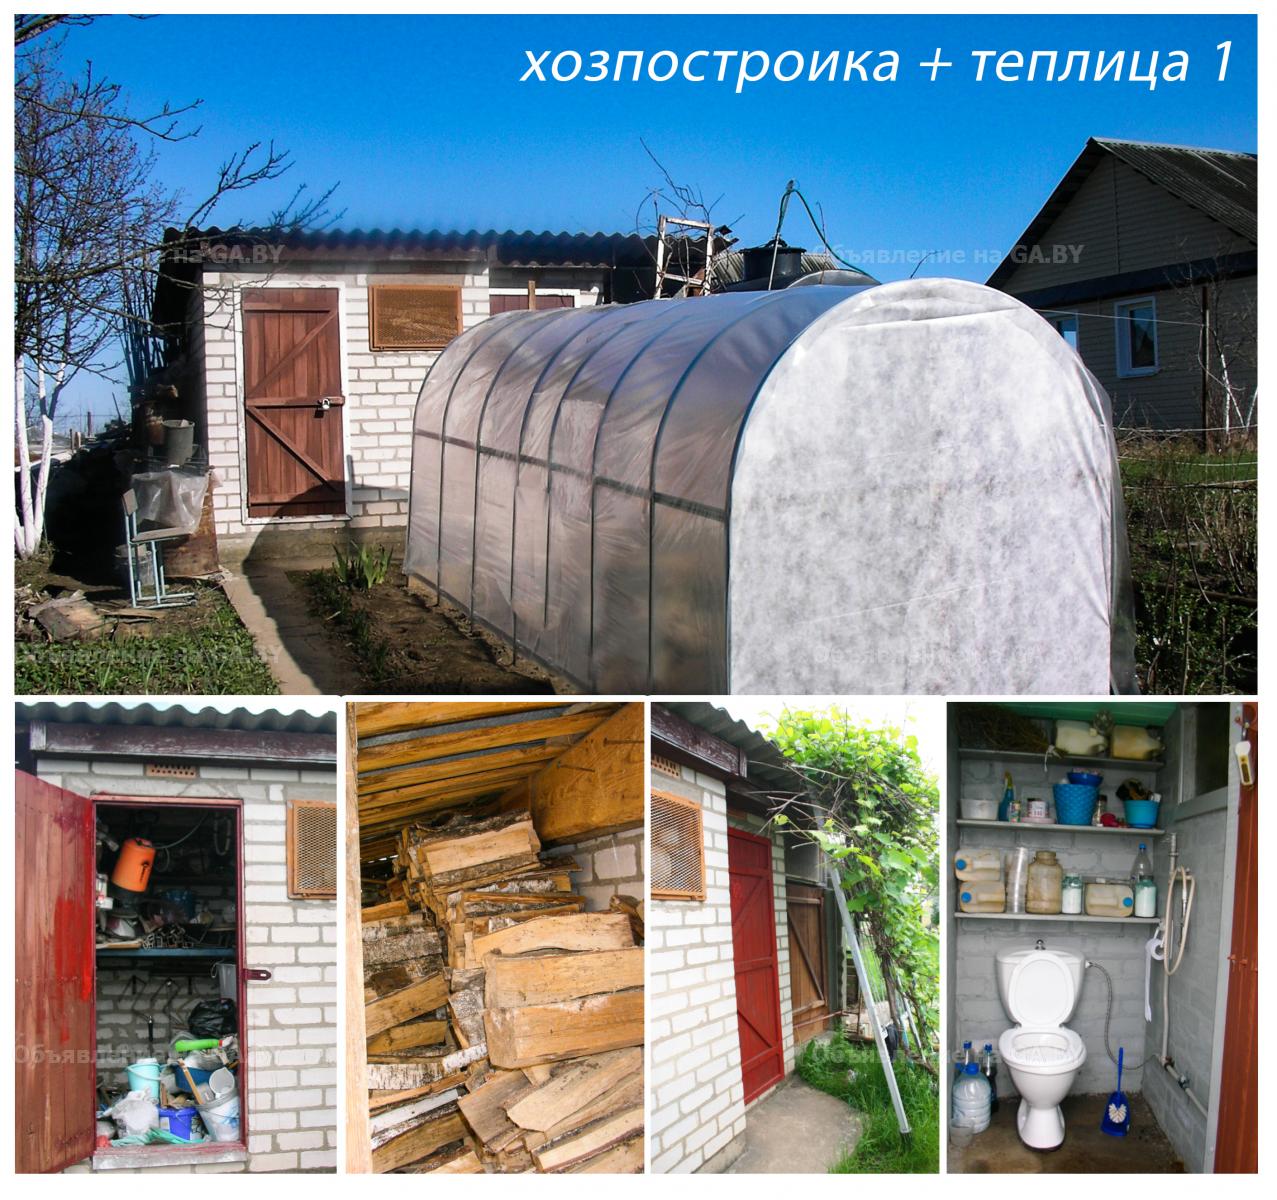 Выполню Дача в 25 км от Минска: 3-этажа, гараж, камин, сад - GA.BY